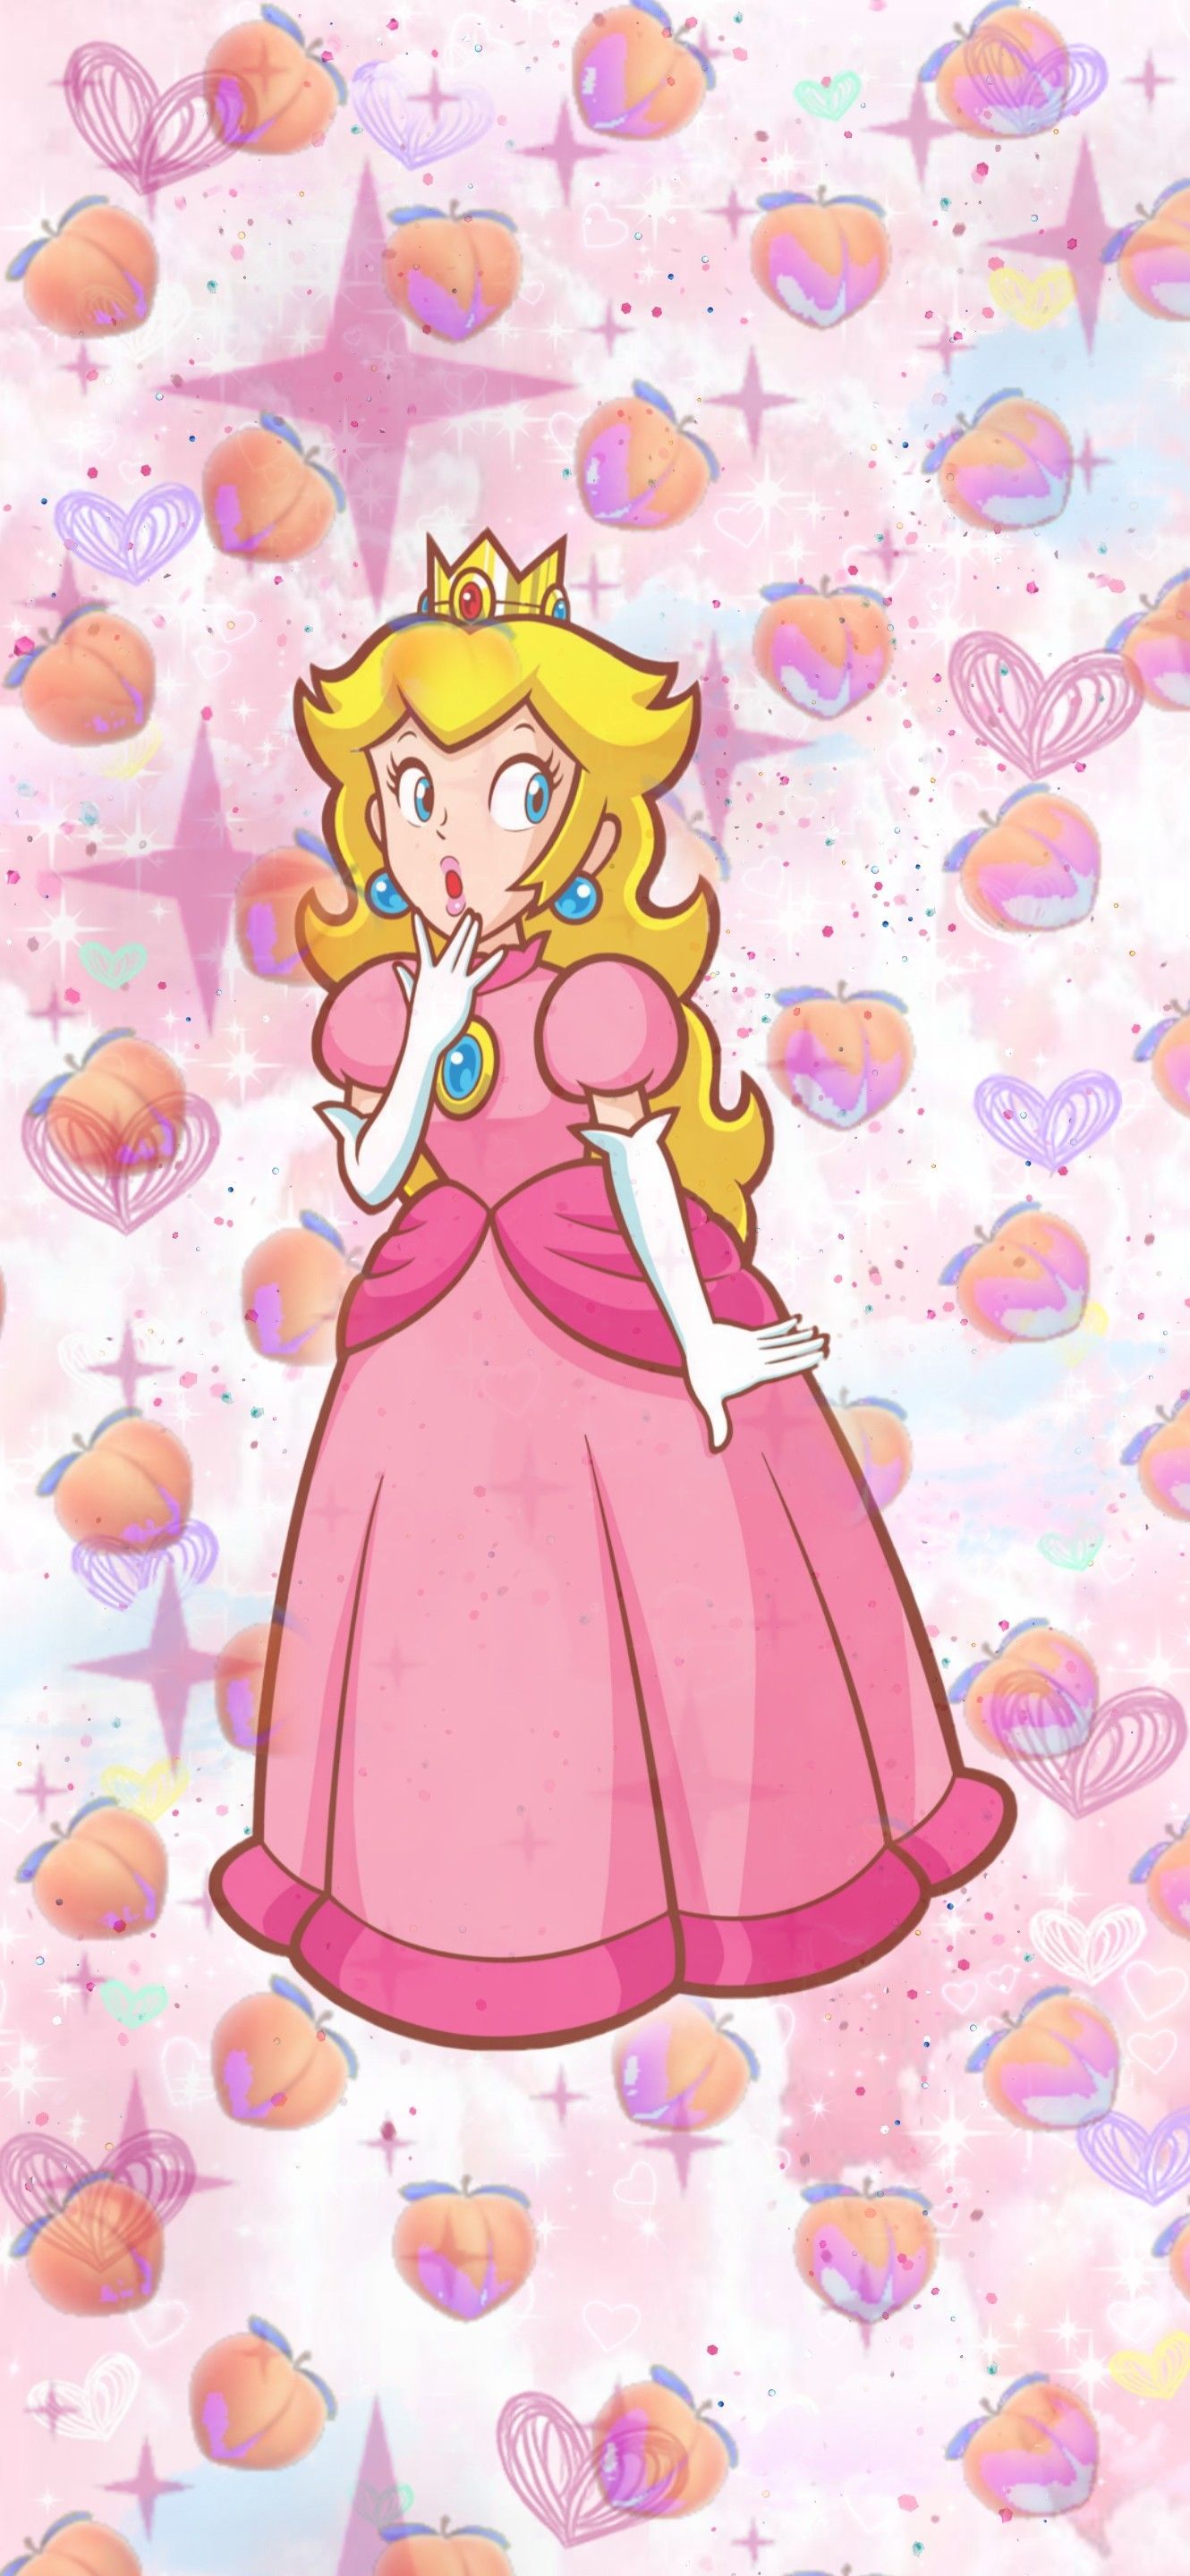 Nintendo Princess Peach pink aesthetic Phone Wallpaper. Peach wallpaper, Princess peach mario kart, Super princess peach